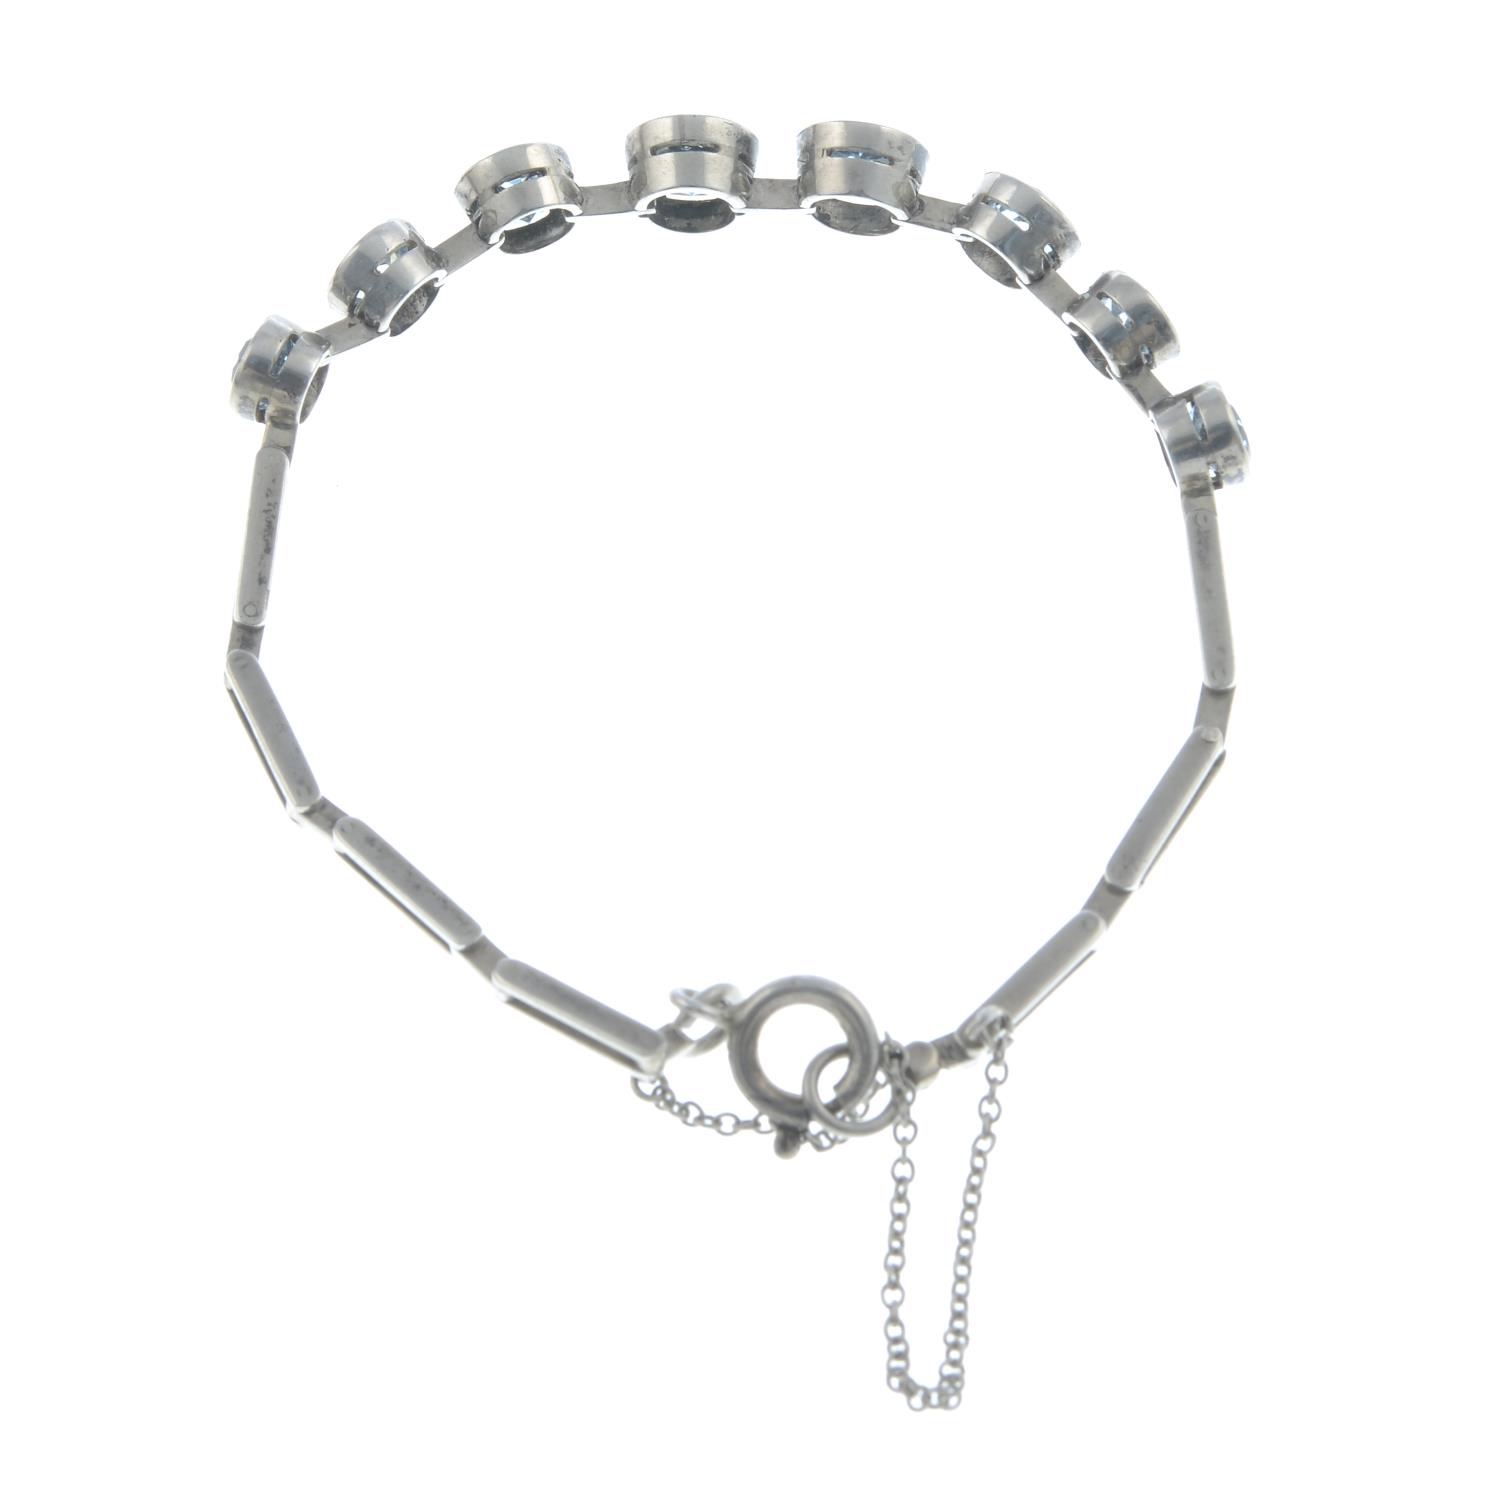 An aquamarine bracelet.Length 17.3cms. - Image 2 of 2